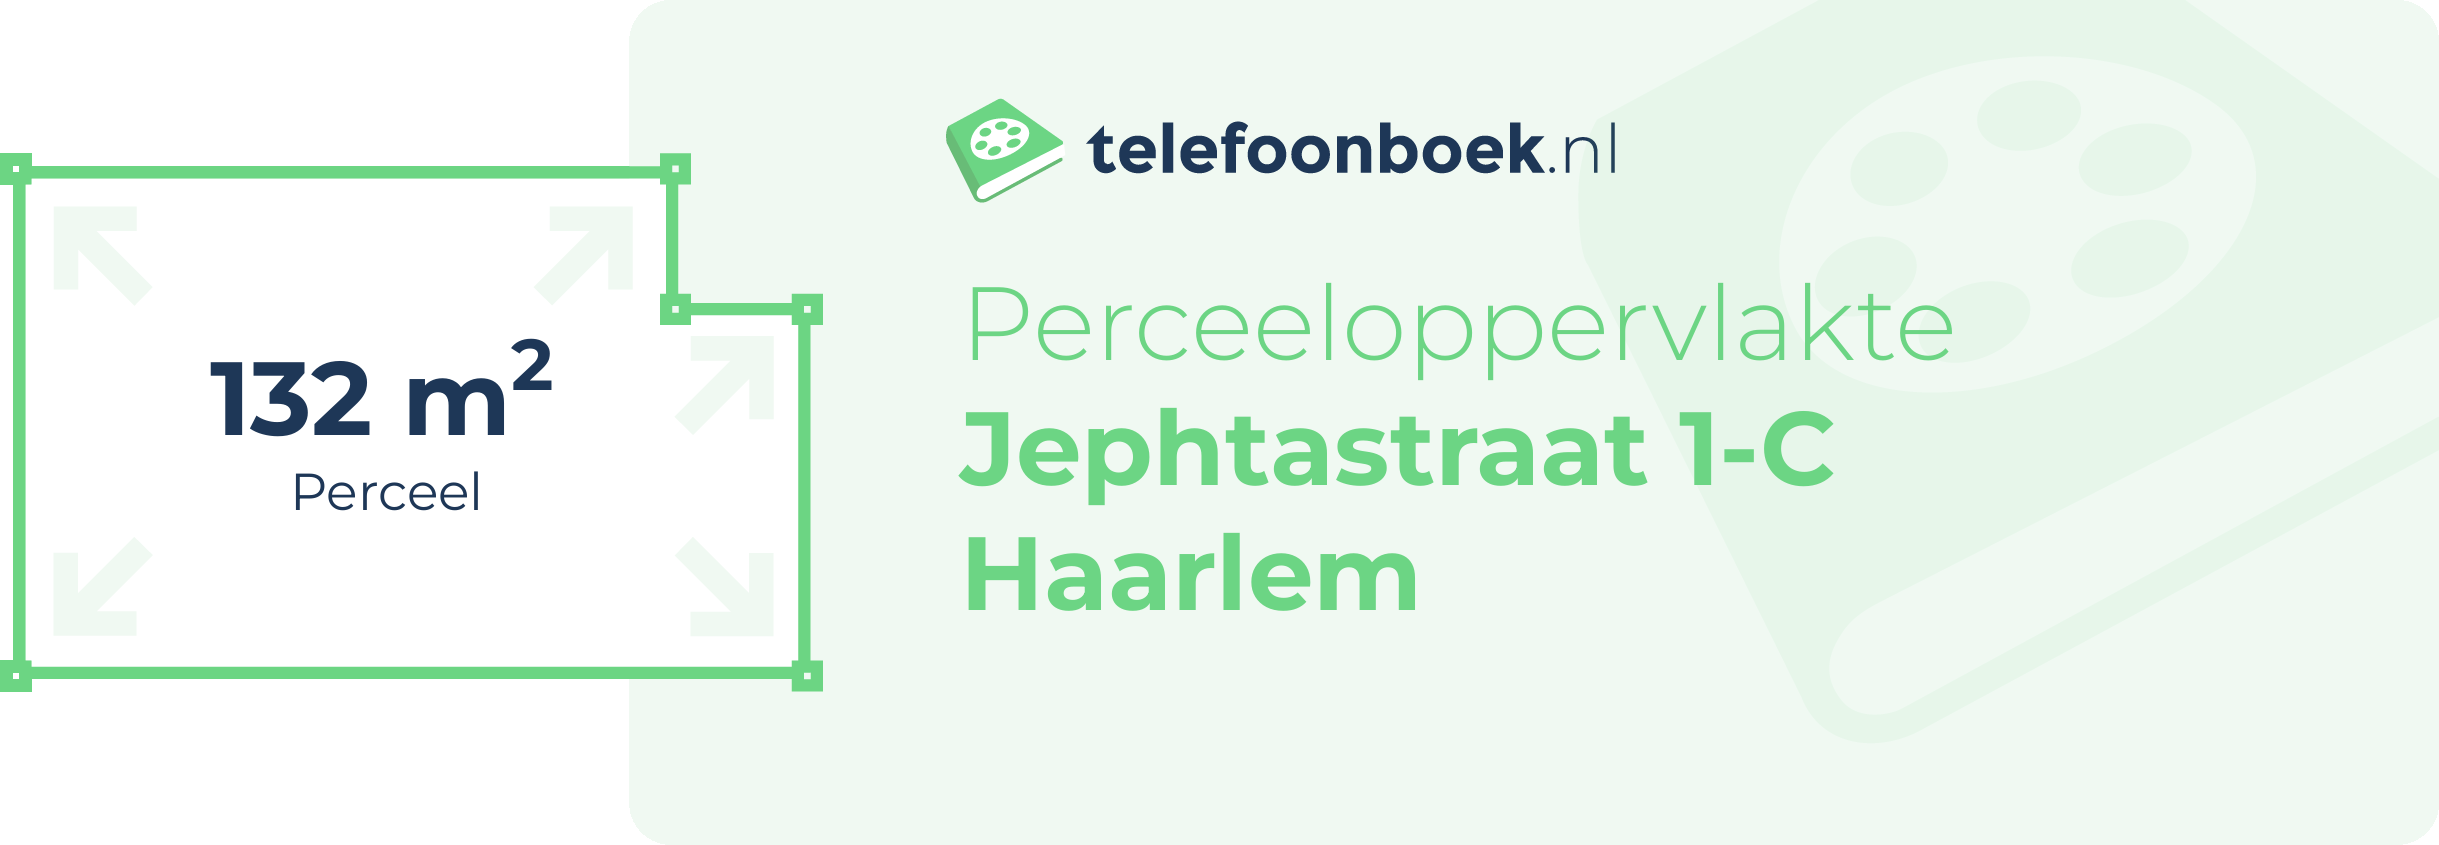 Perceeloppervlakte Jephtastraat 1-C Haarlem